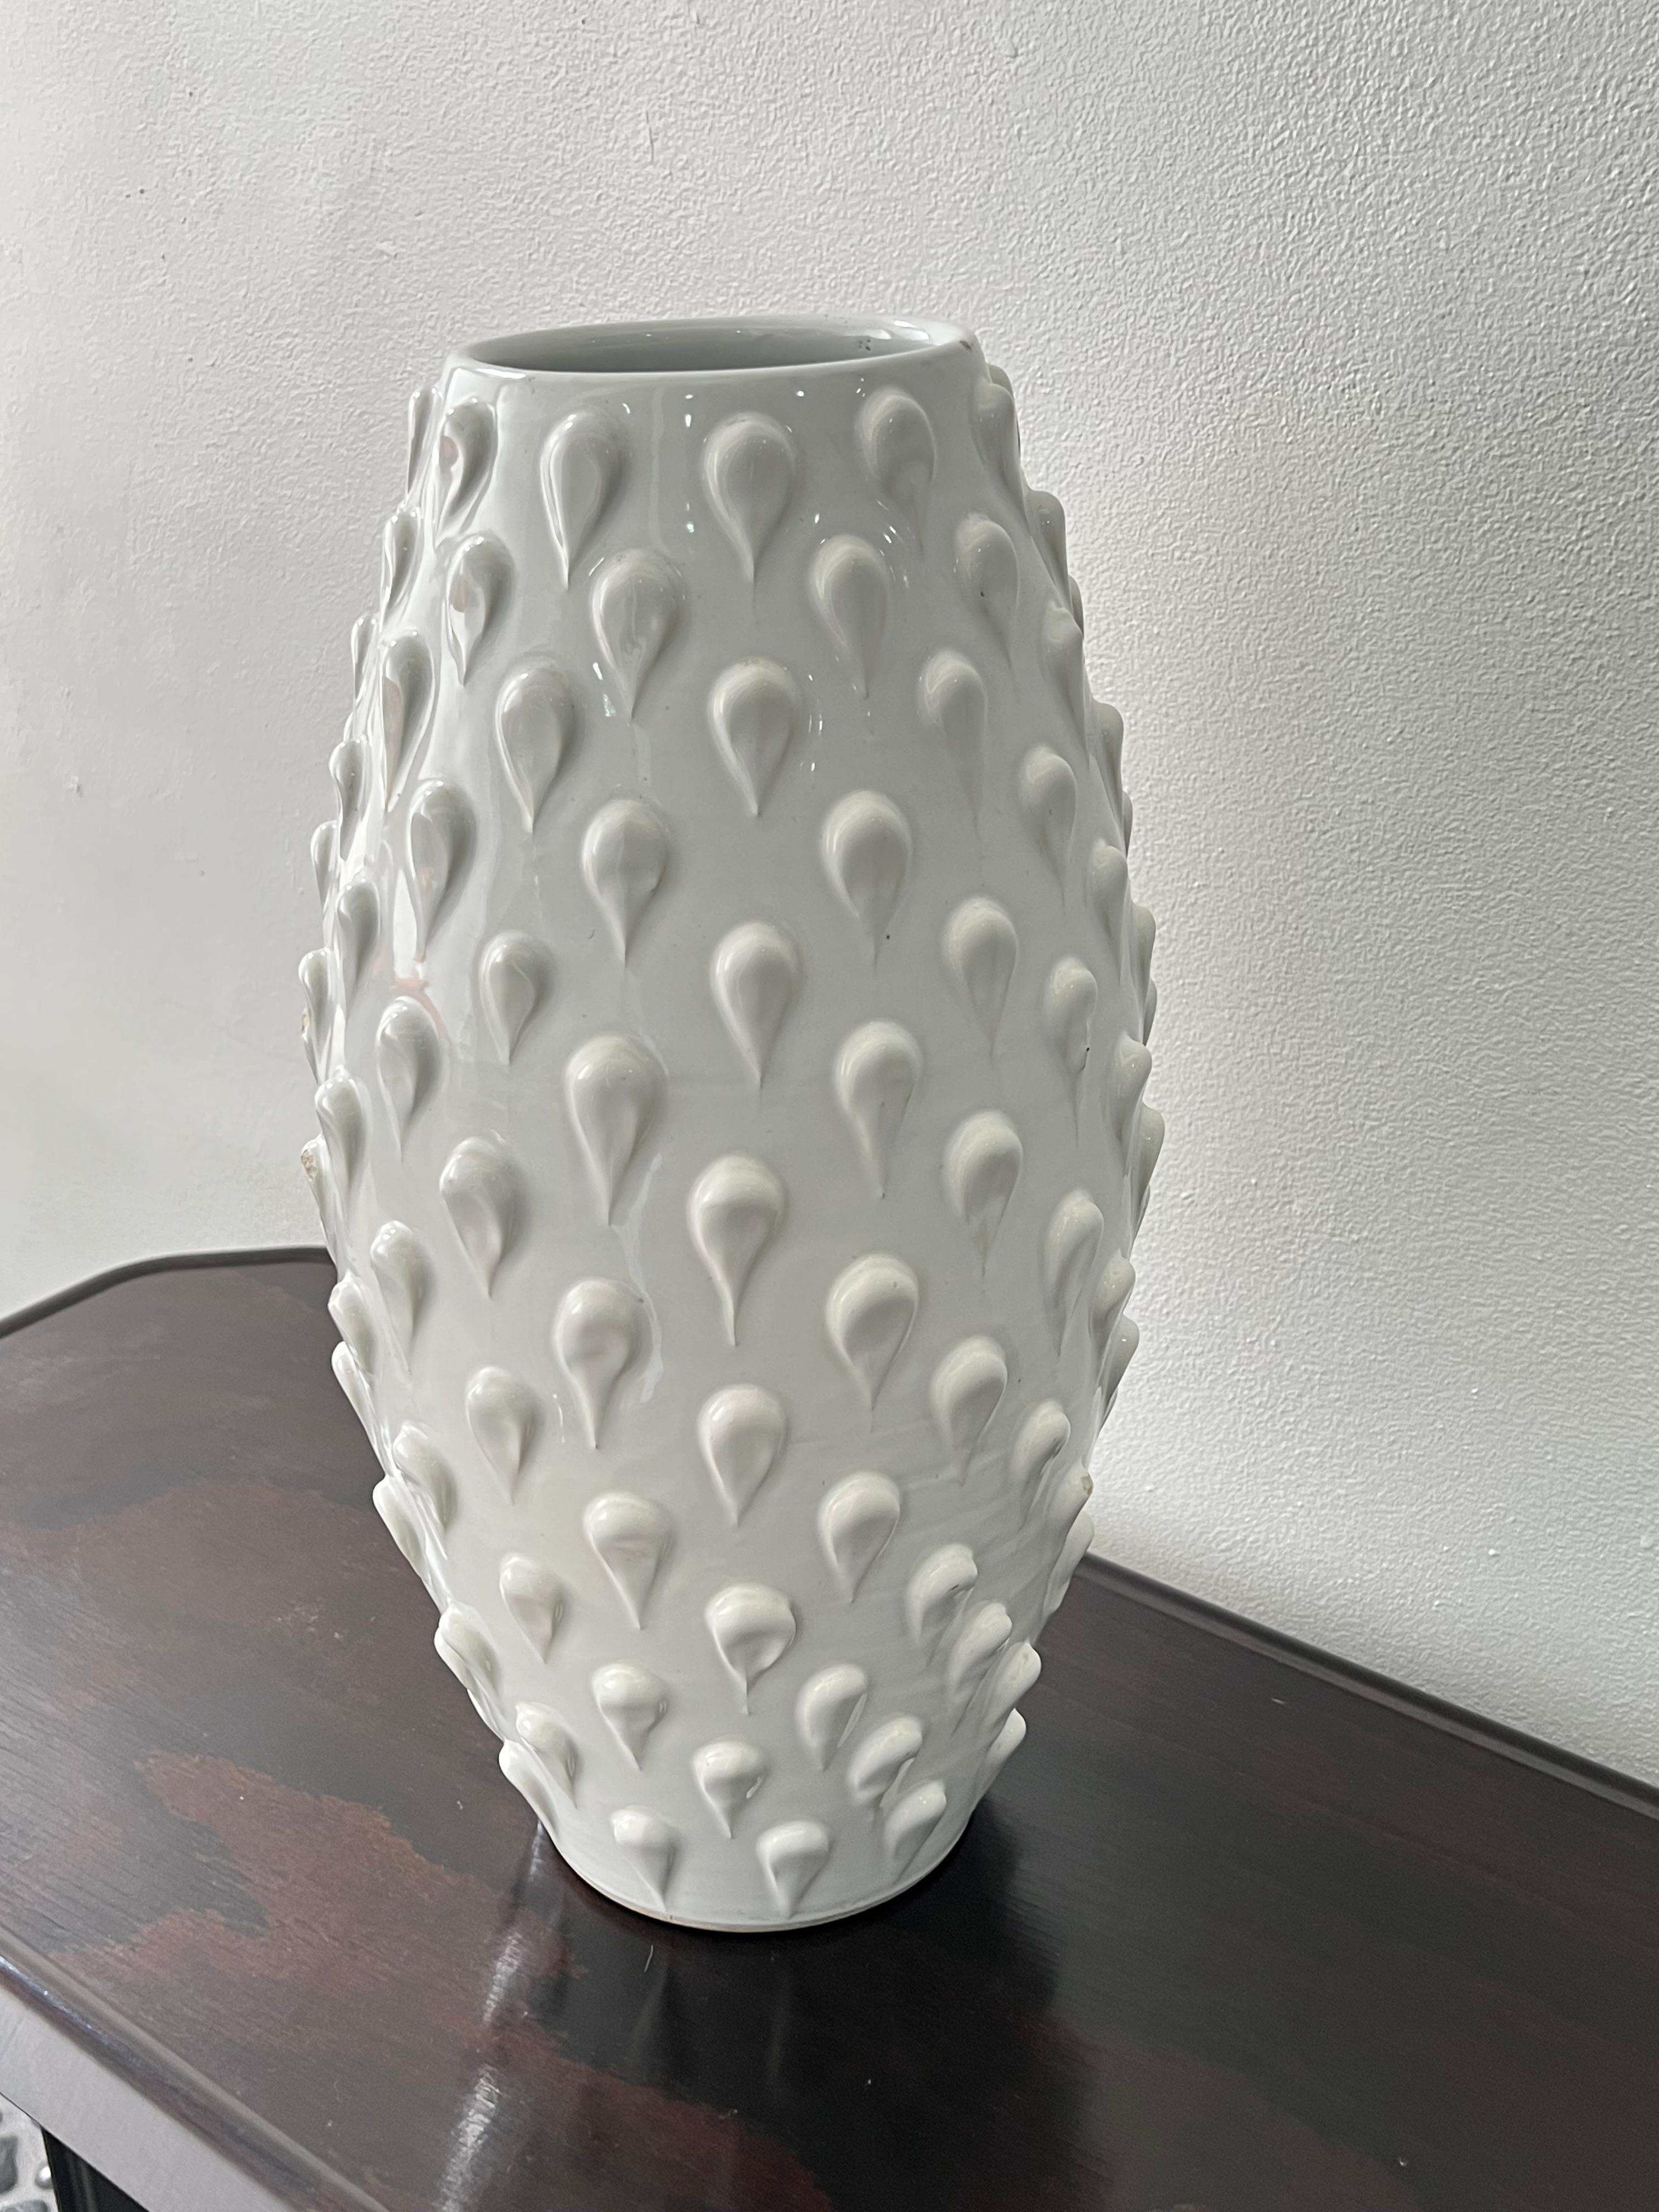 Late 20th Century Italian Space Age White Vase in Glazed Ceramic by Bitossi 1970s